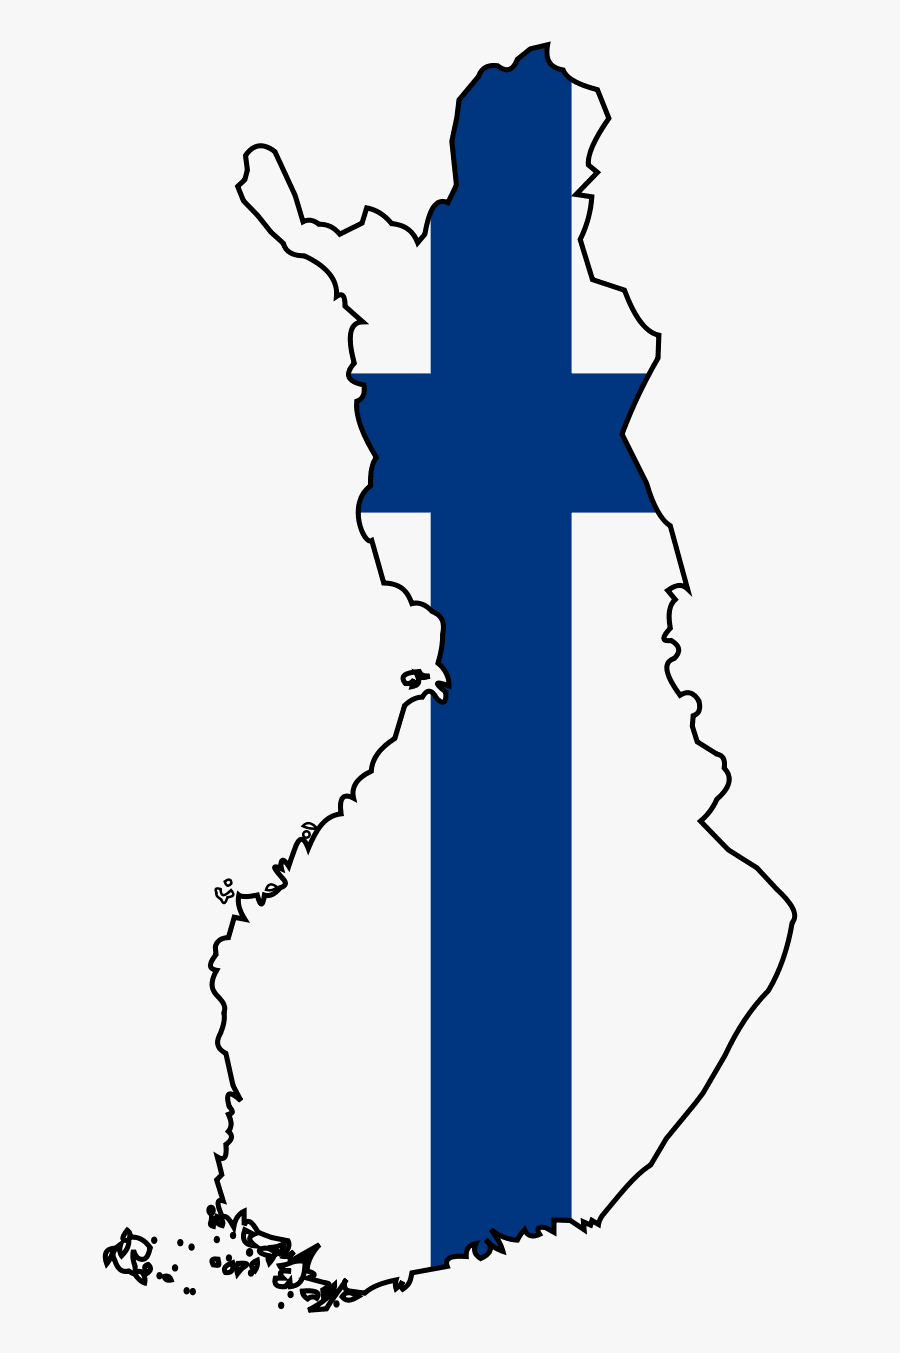 Finland Flag Map Png, Transparent Clipart